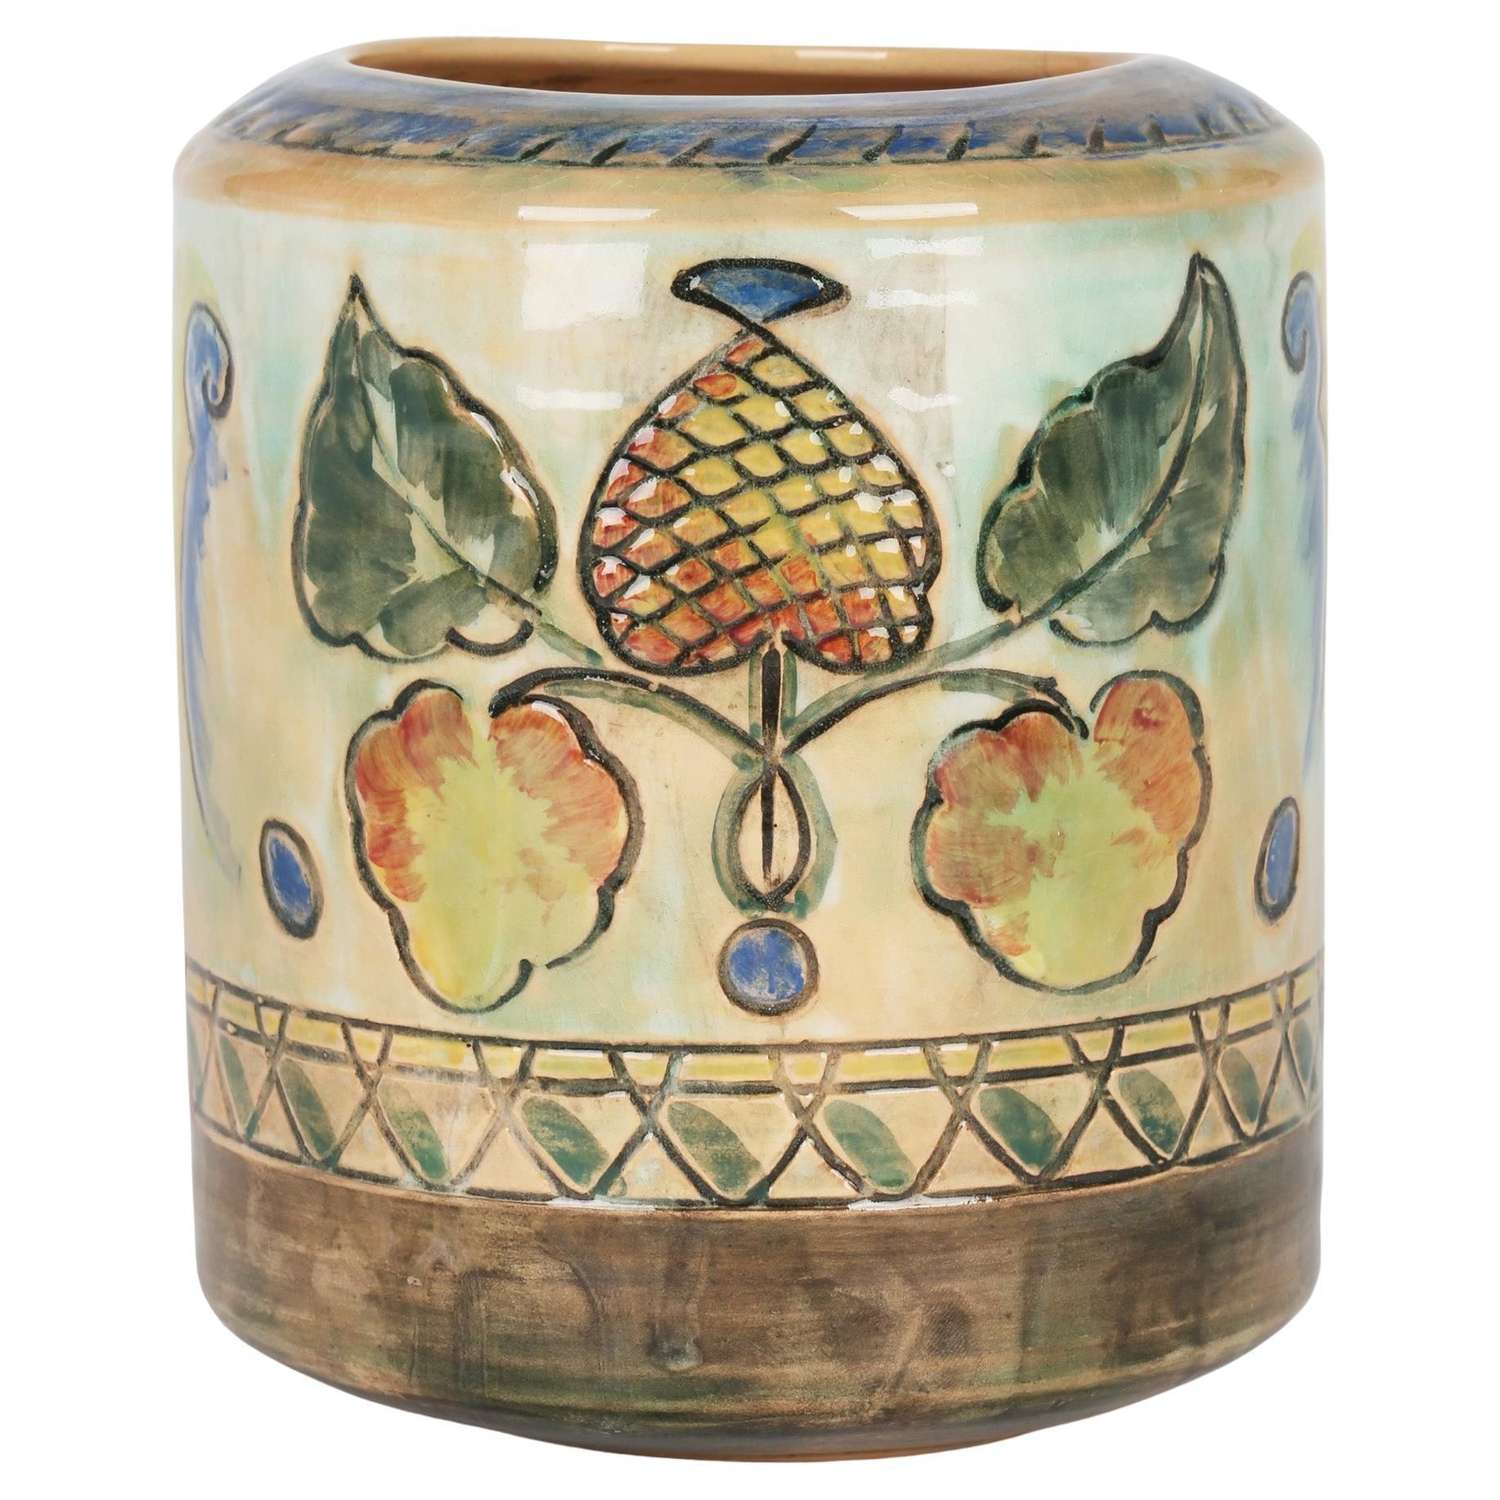 Frank Brangwyn Royal Doulton Leaf and Berry Art Pottery Vase